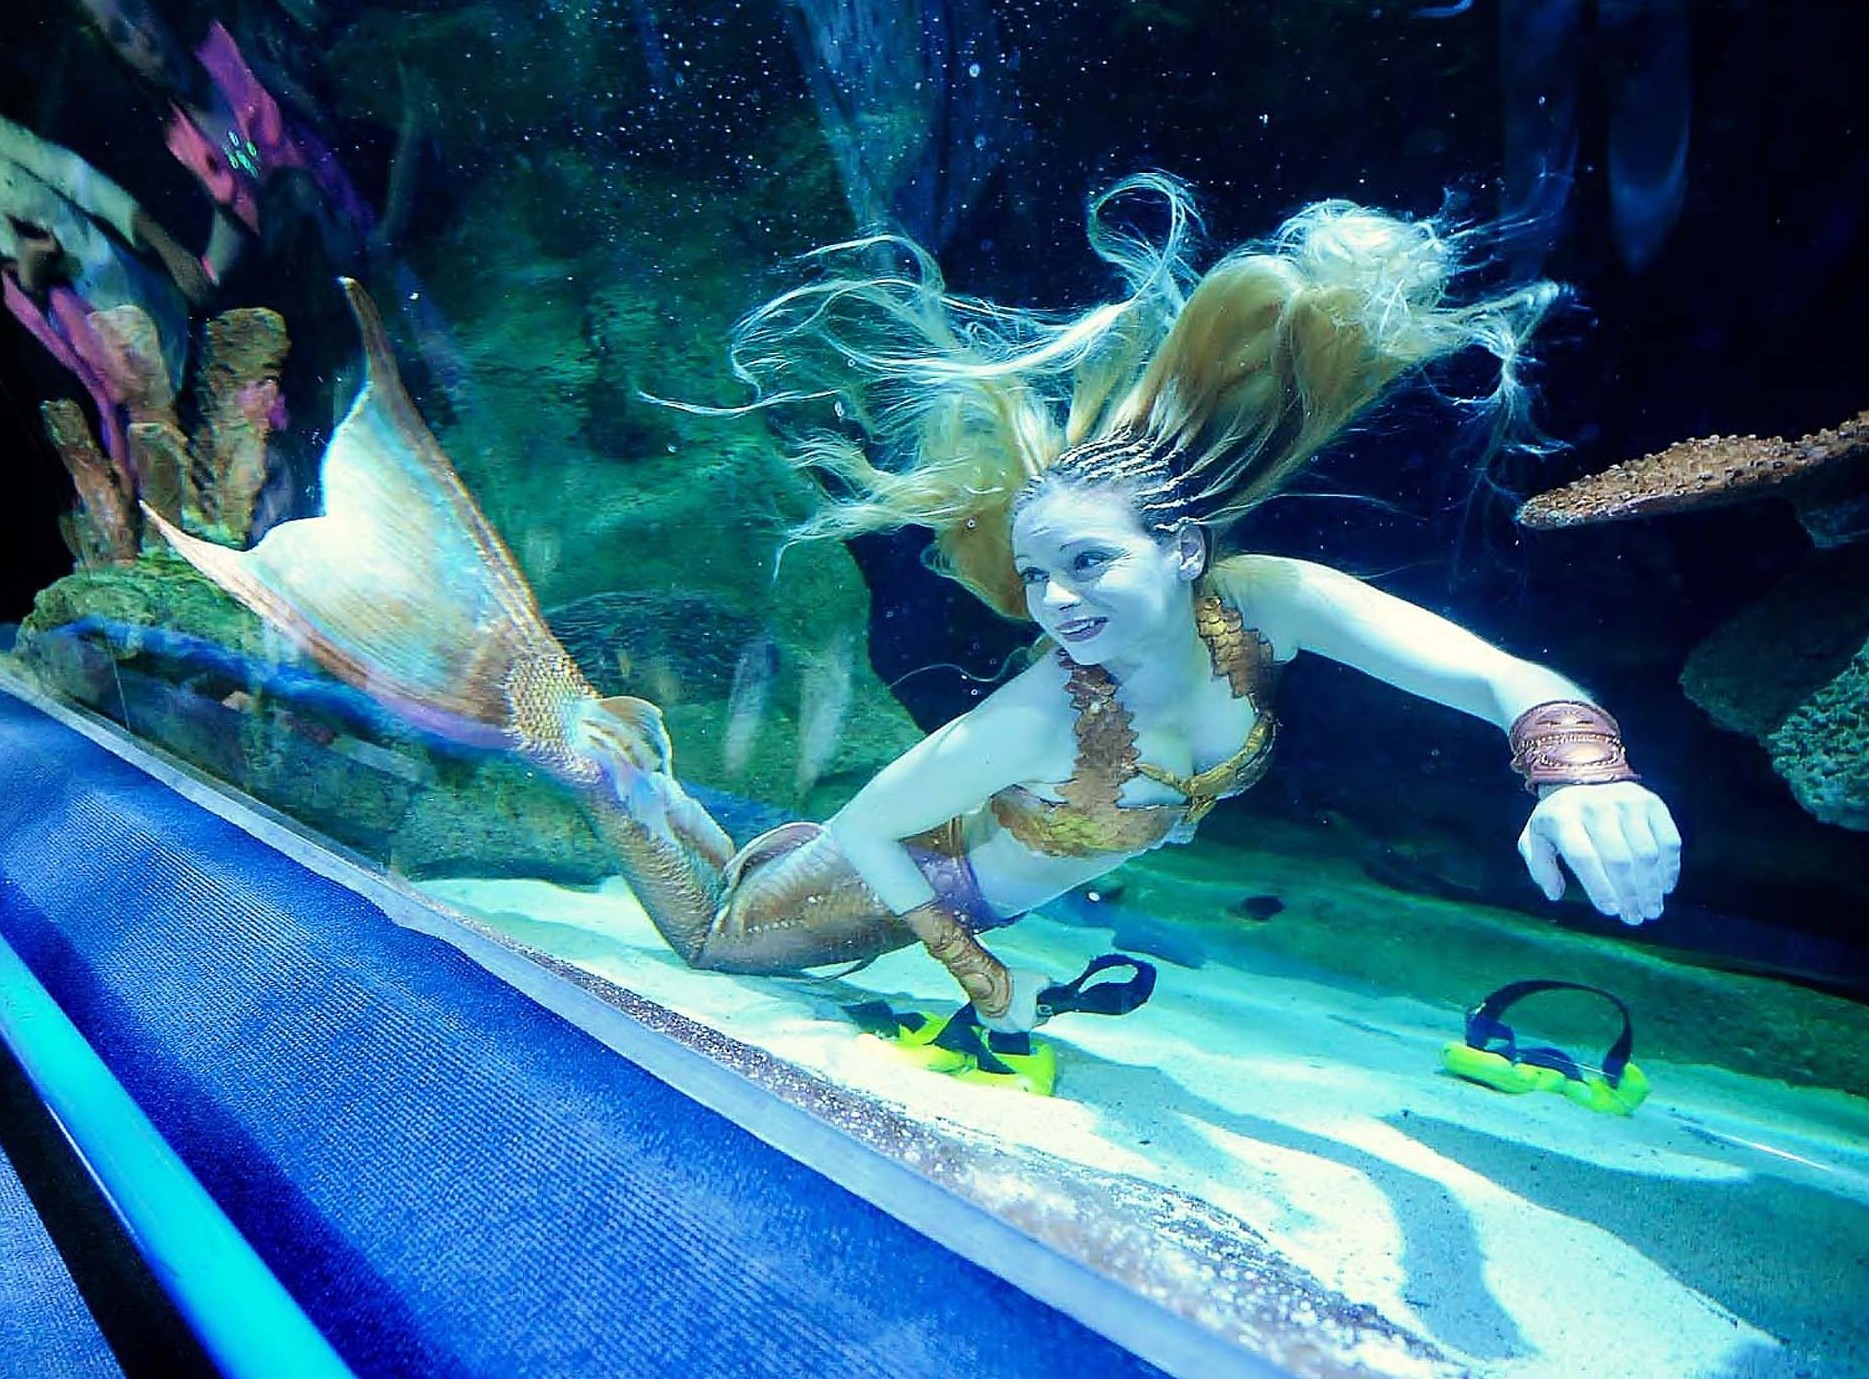 Mermaid appears at Blue Planet Aquarium in Cheshire Oaks, Cheshire, Britain - 20 Oct 2013